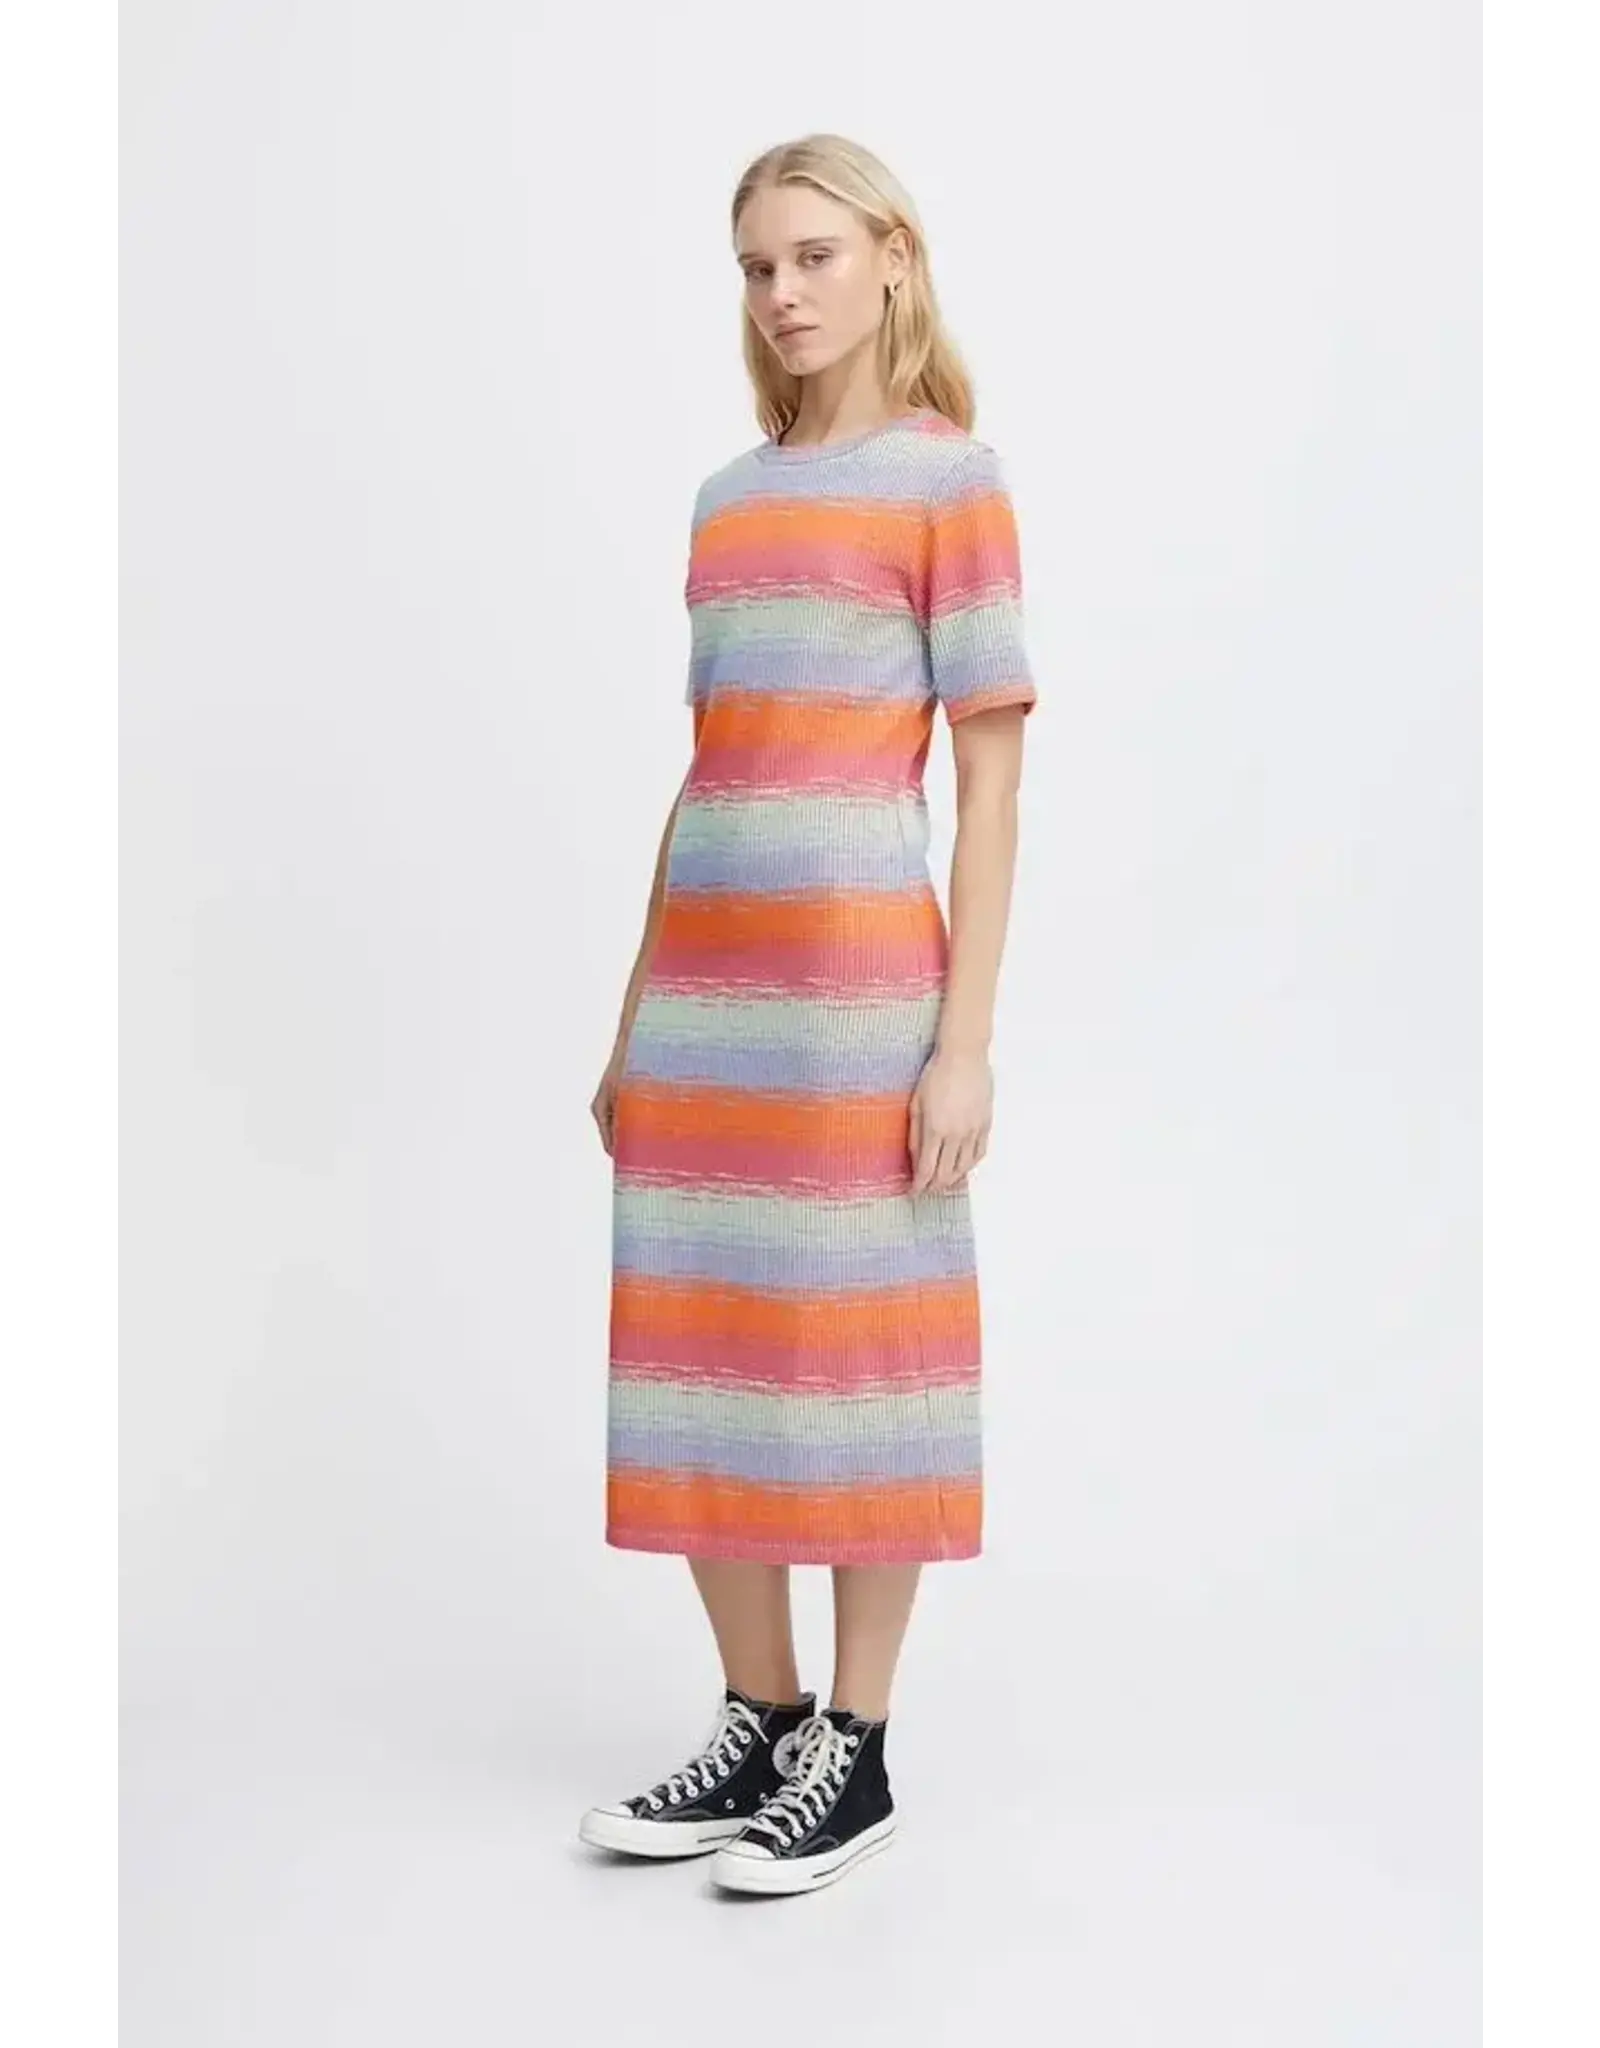 ICHI ICHI - Odela dress (multi colour)